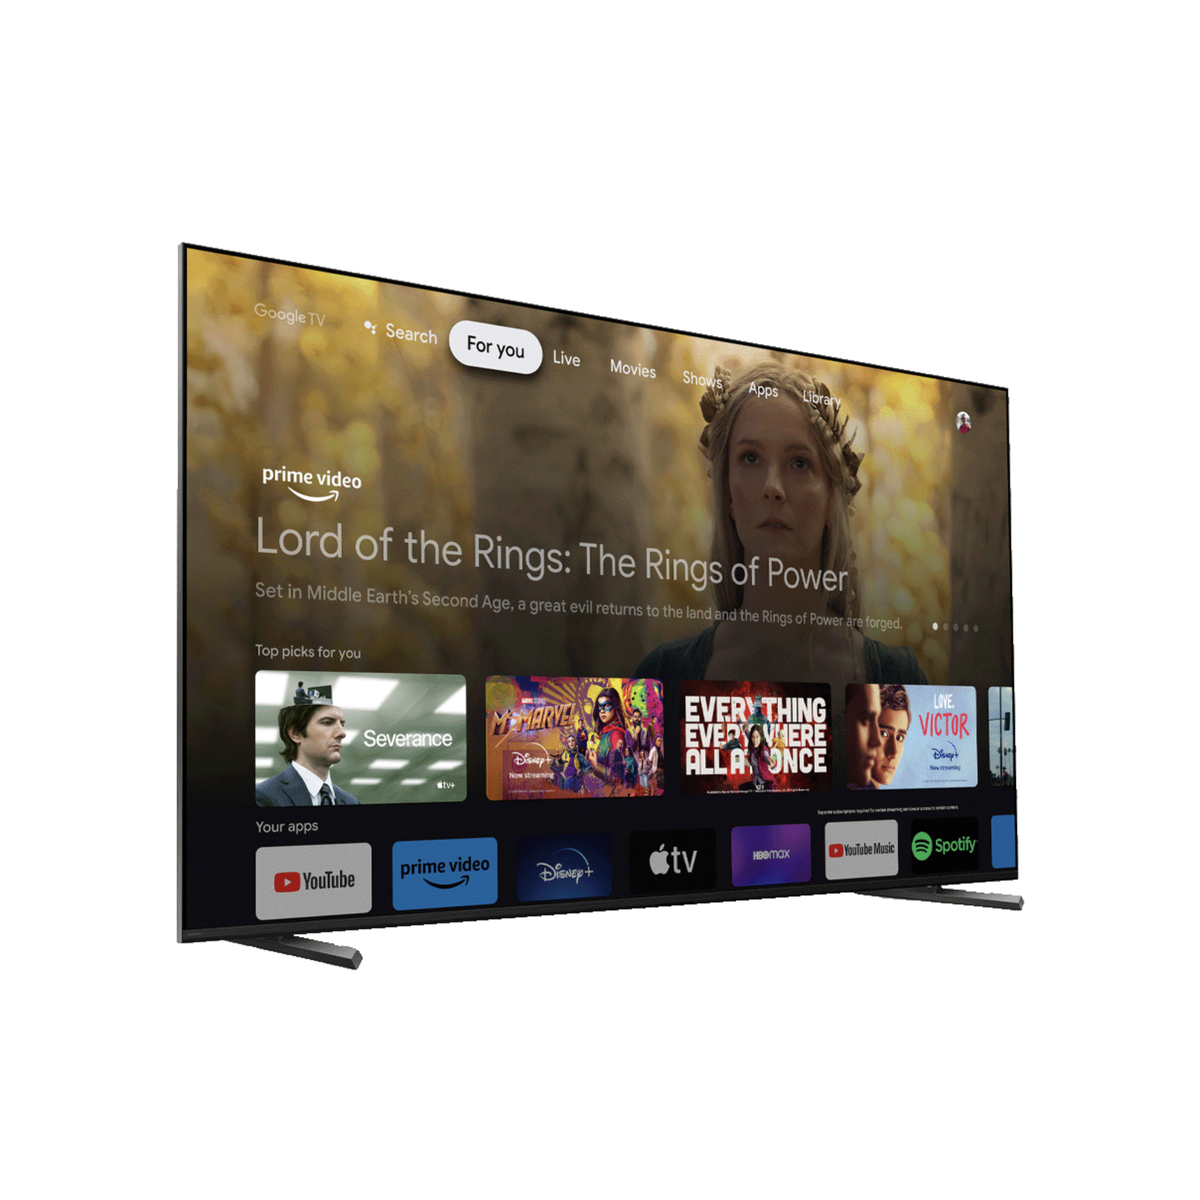 Sony Bravia 75 inches 4K Ultra HD Google Smart LED TV, XR-75X90L